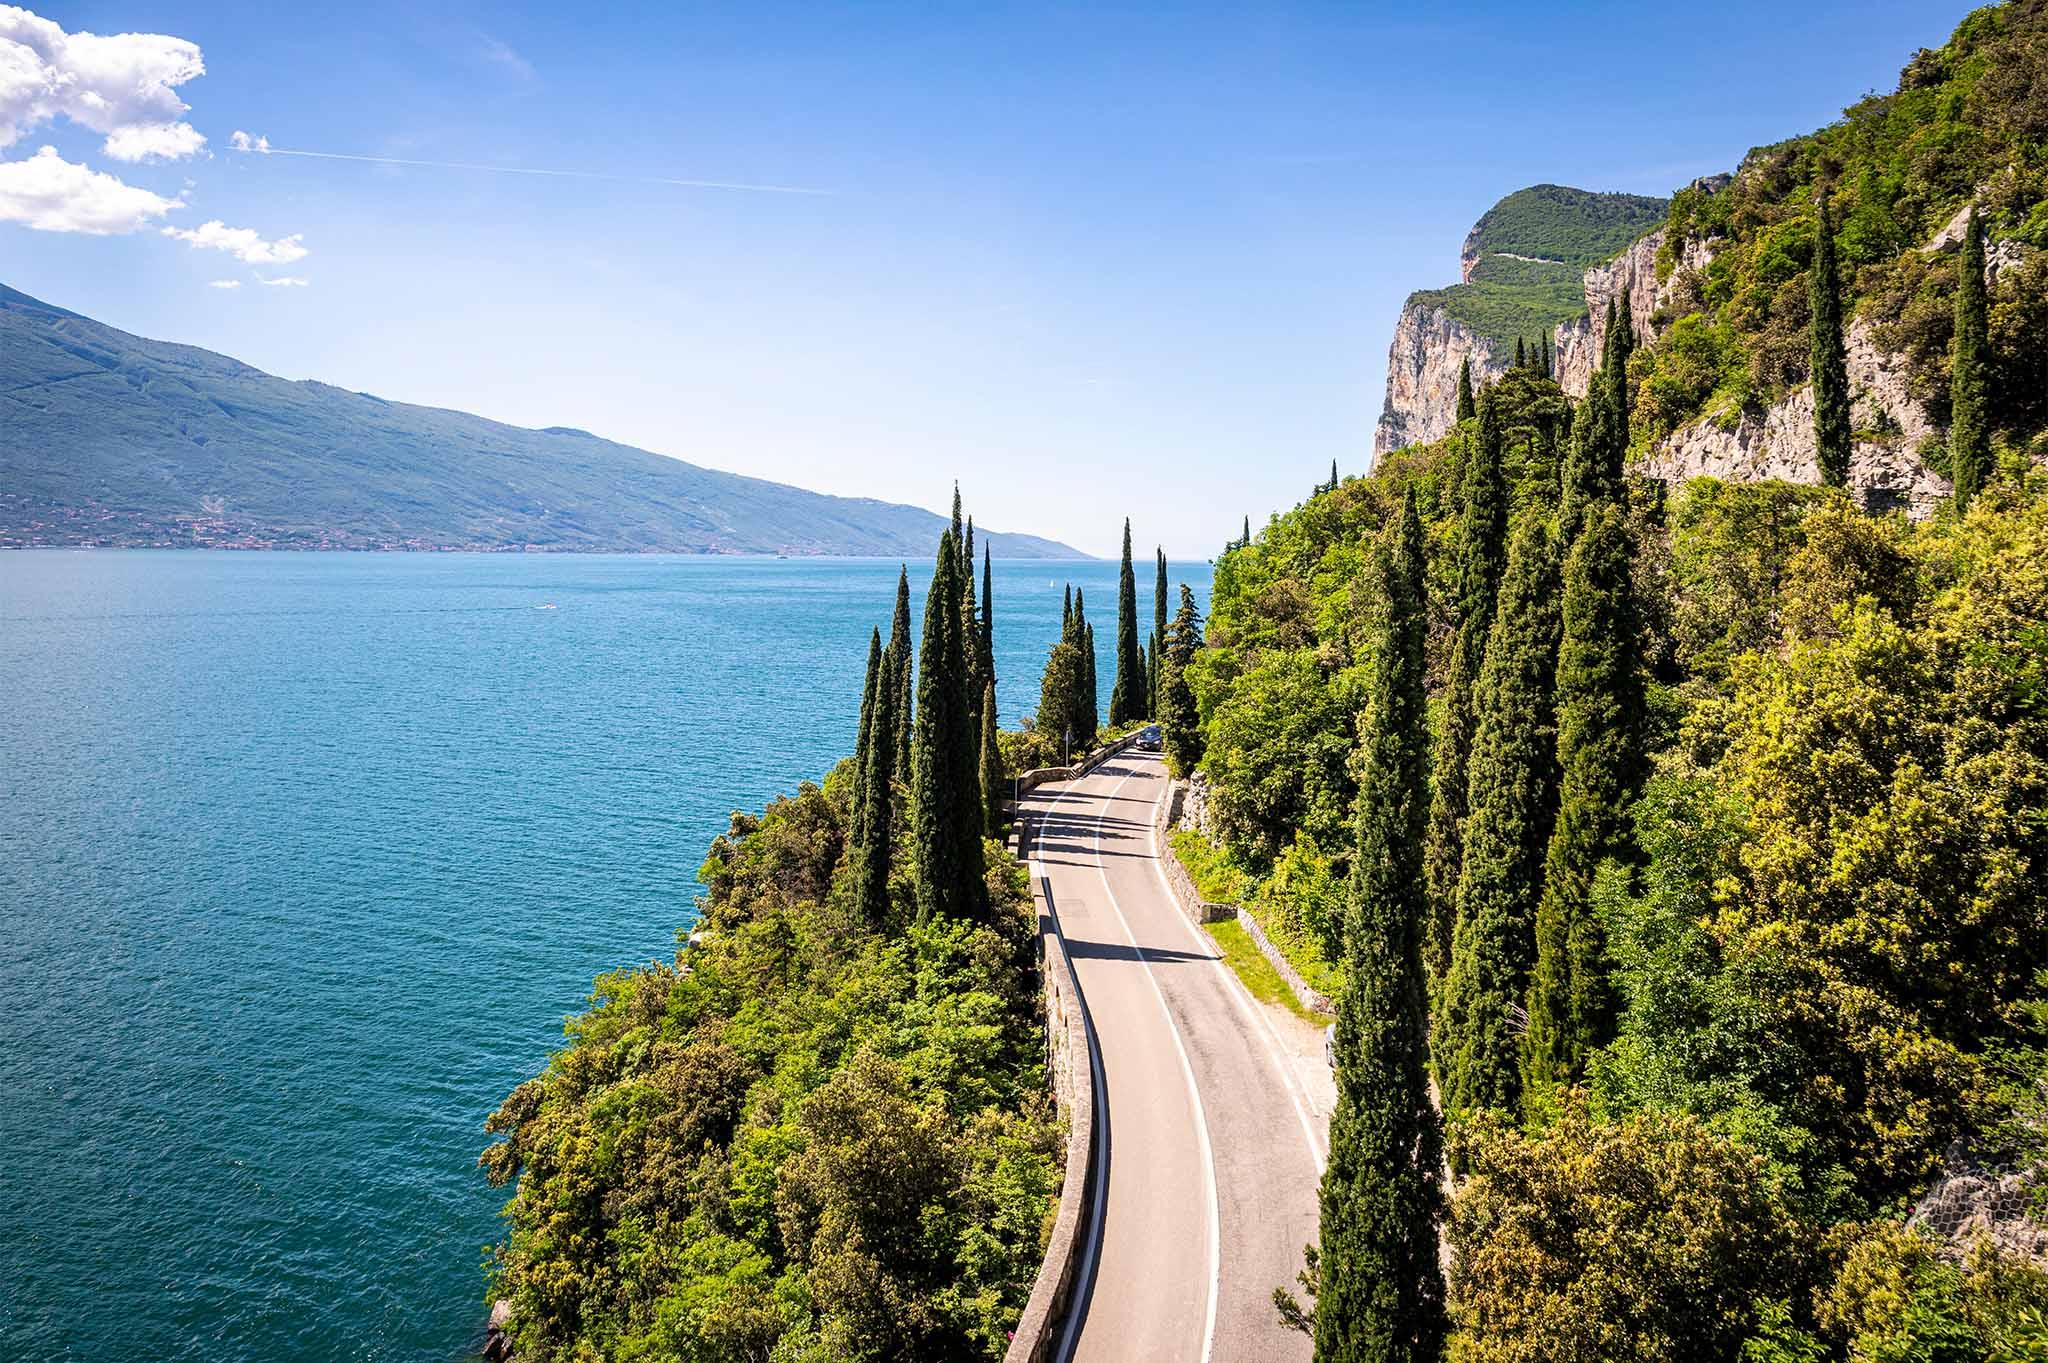 Lake_Garda_Real_Estate-for_sale_Sothebys_Realty_Italy.jpg